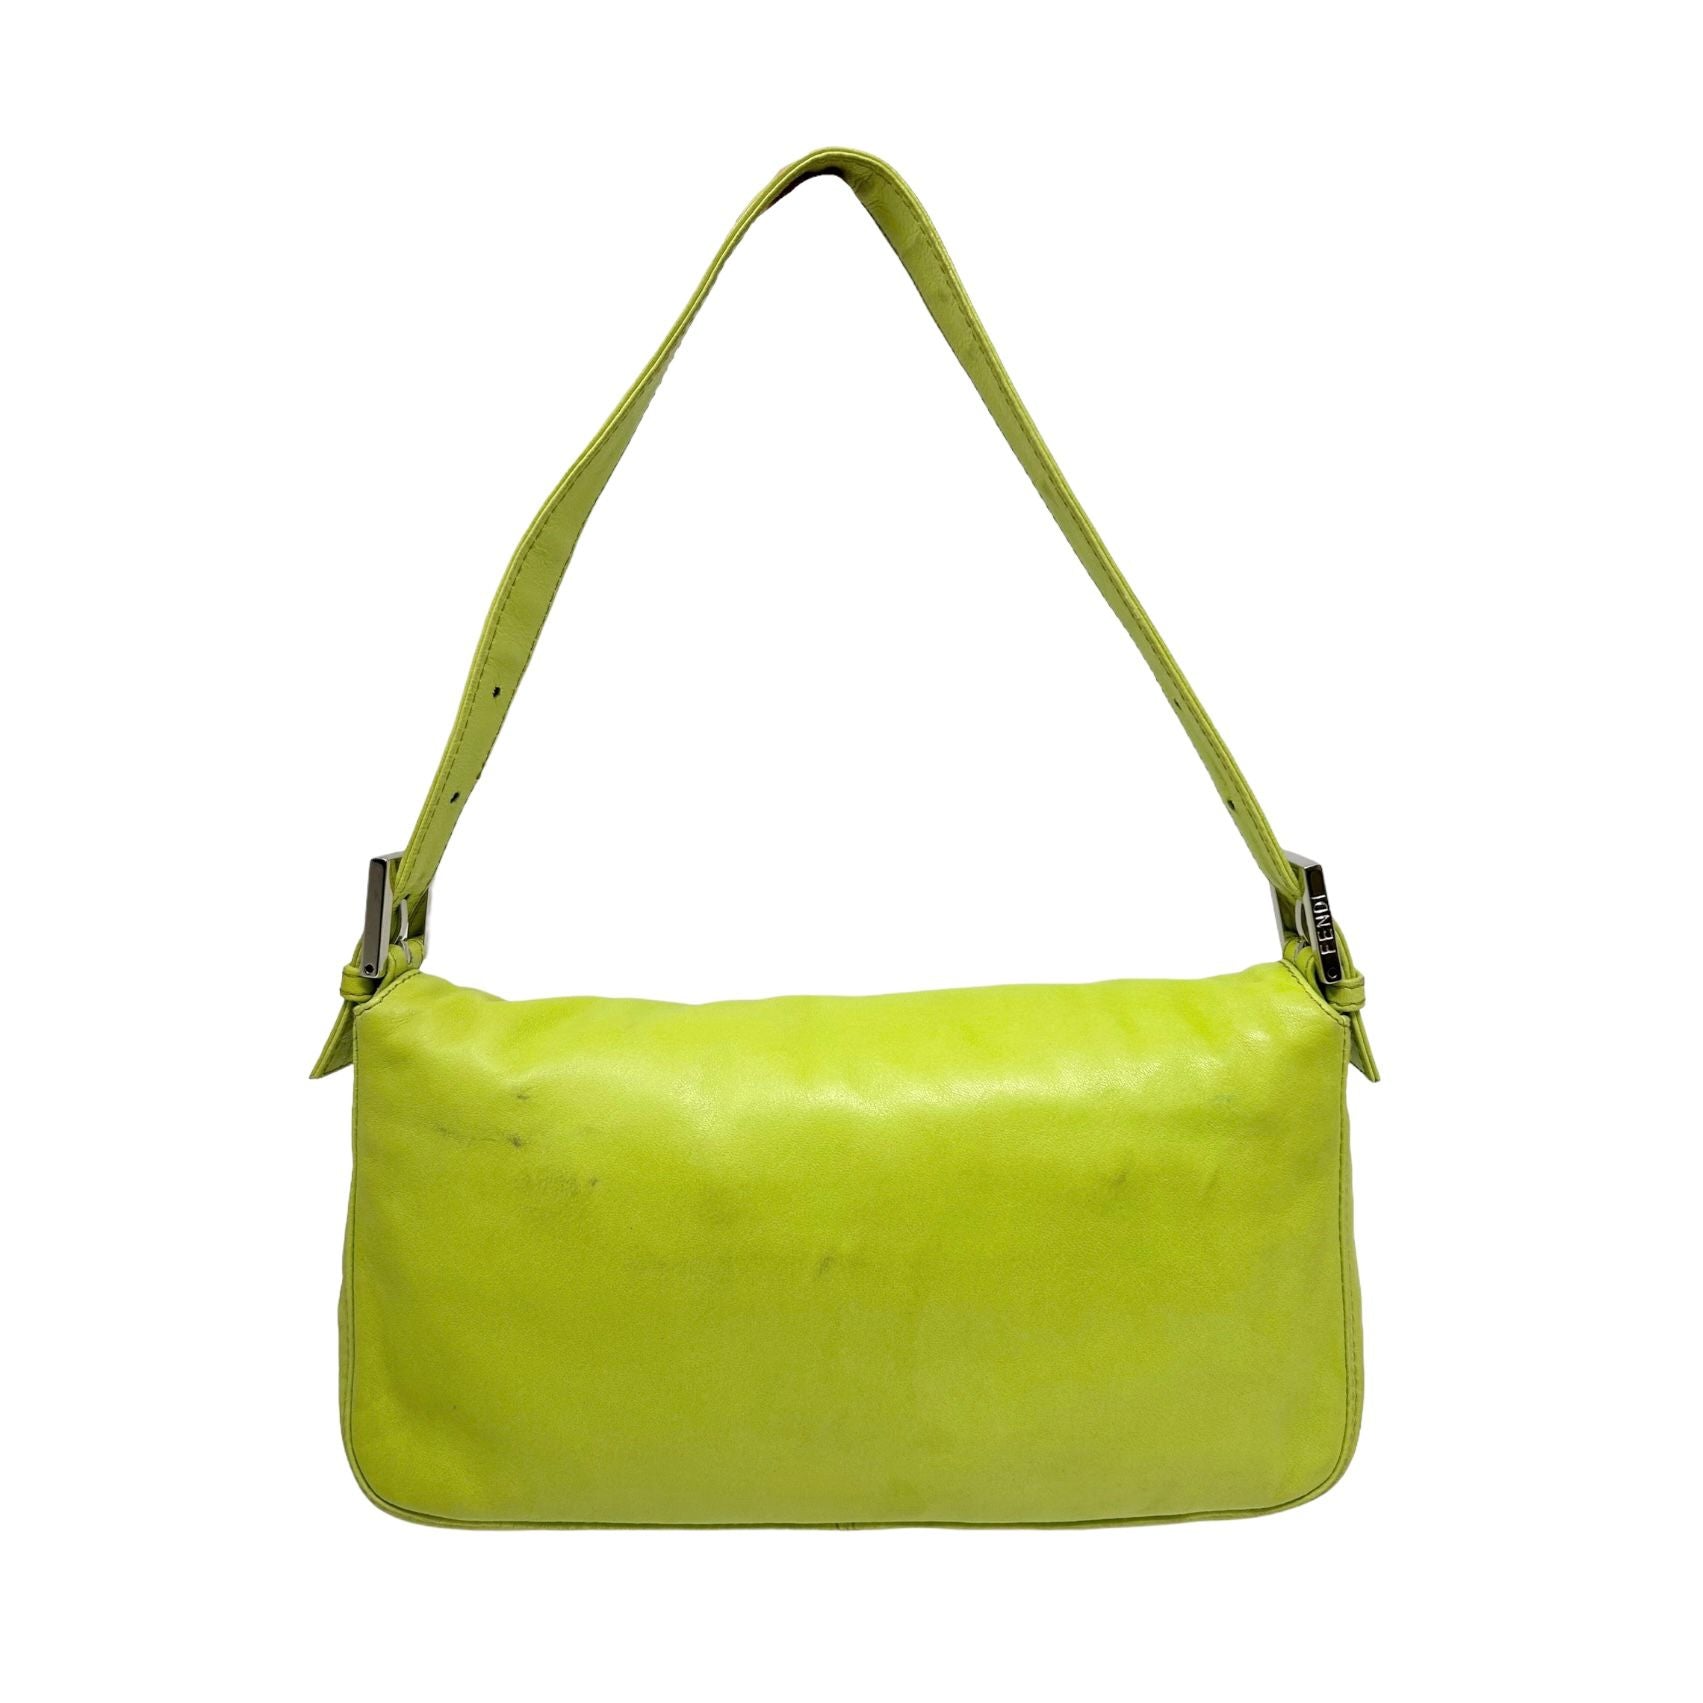 Fendi Lime Green Leather Baguette Bag